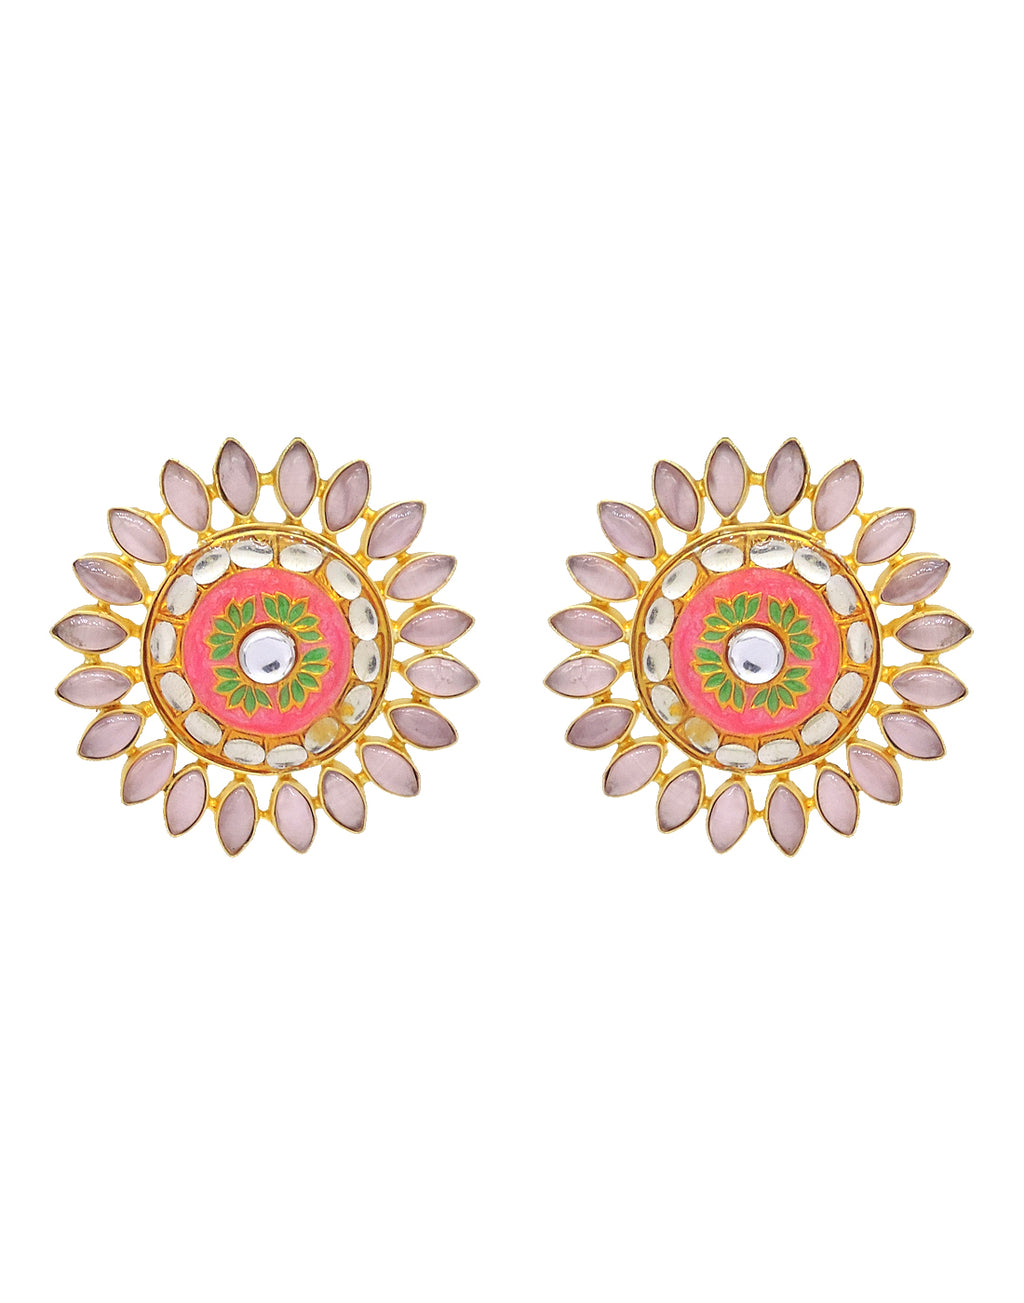 Pink Sunflower Earrings - Statement Earrings - Gold-Plated & Hypoallergenic Jewellery - Made in India - Dubai Jewellery - Dori